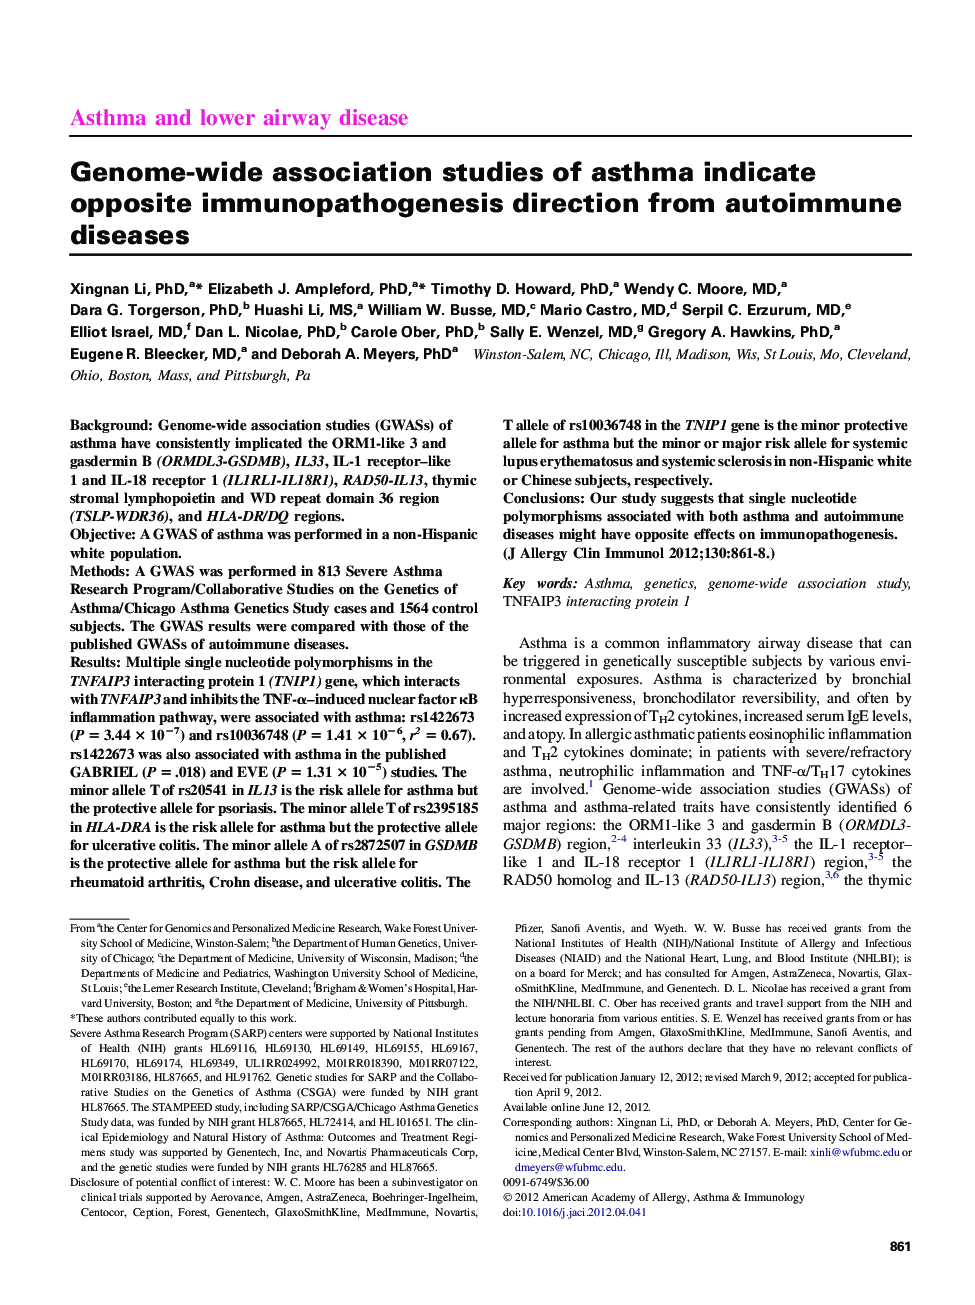 Genome-wide association studies of asthma indicate opposite immunopathogenesis direction from autoimmune diseases